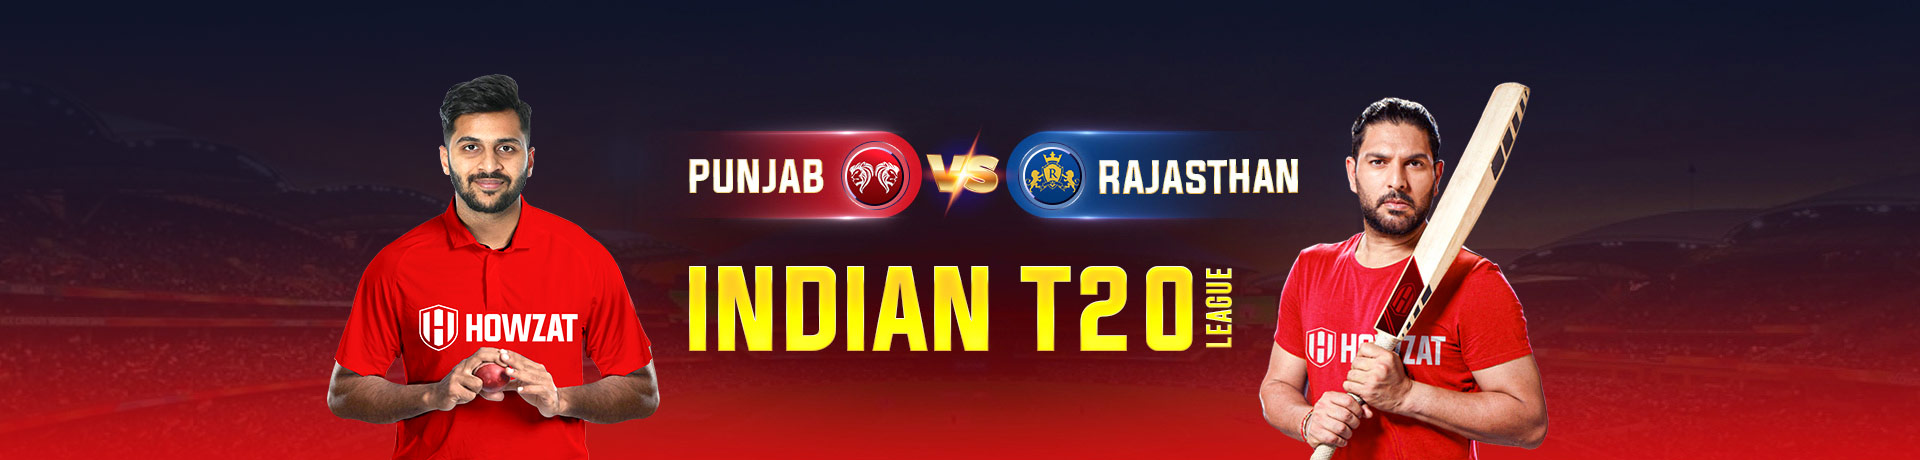 Punjab vs Rajasthan Indian T20 League